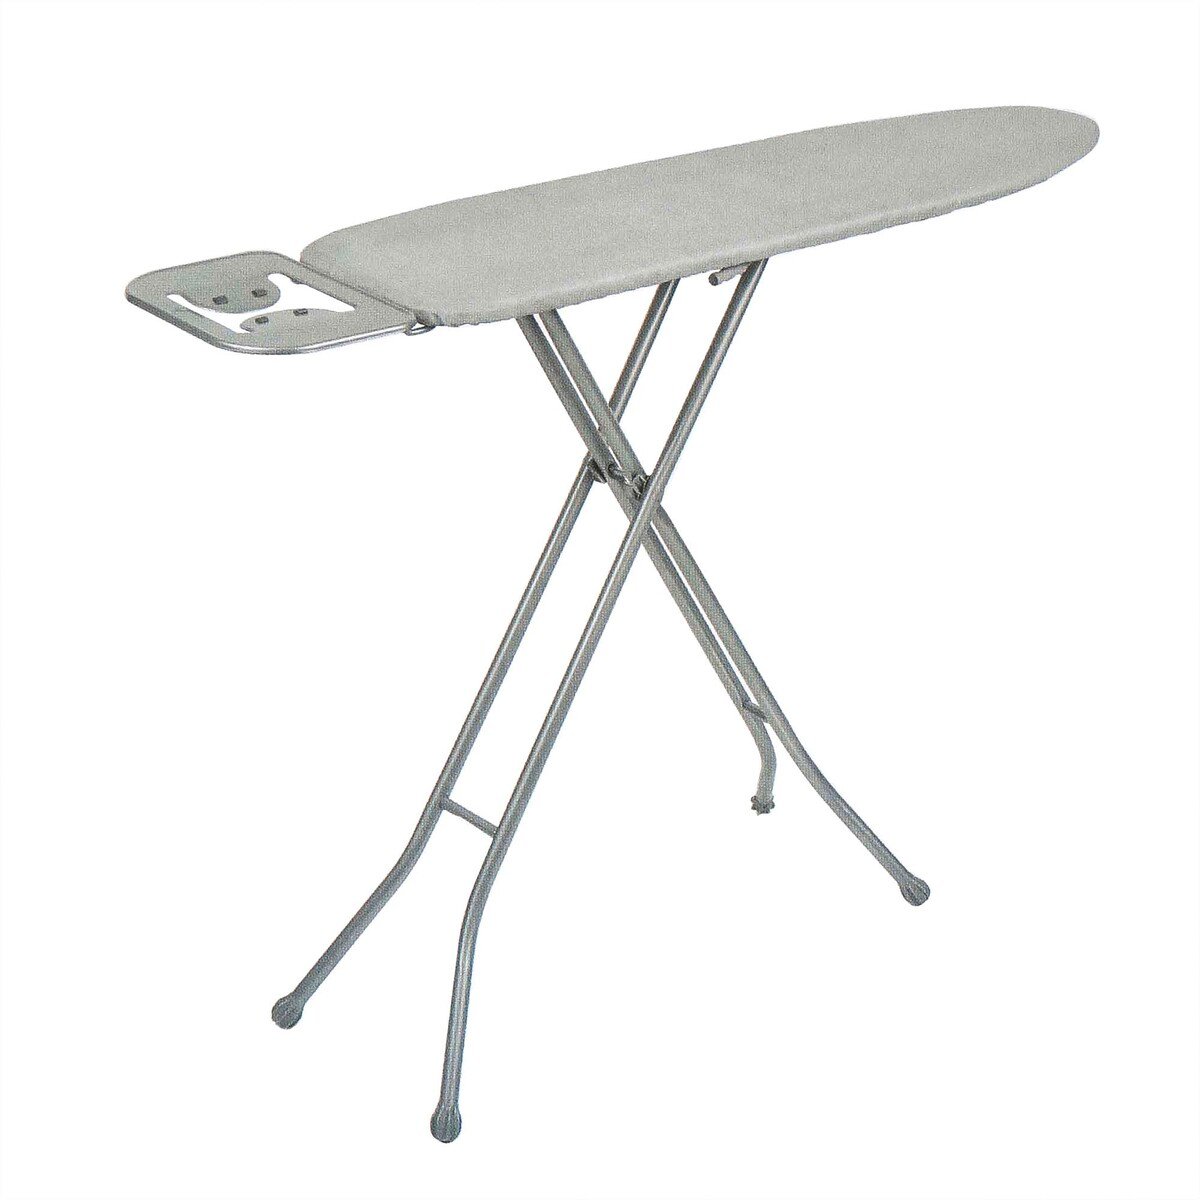 Dogrular Ironing Board 15020 30x105cm